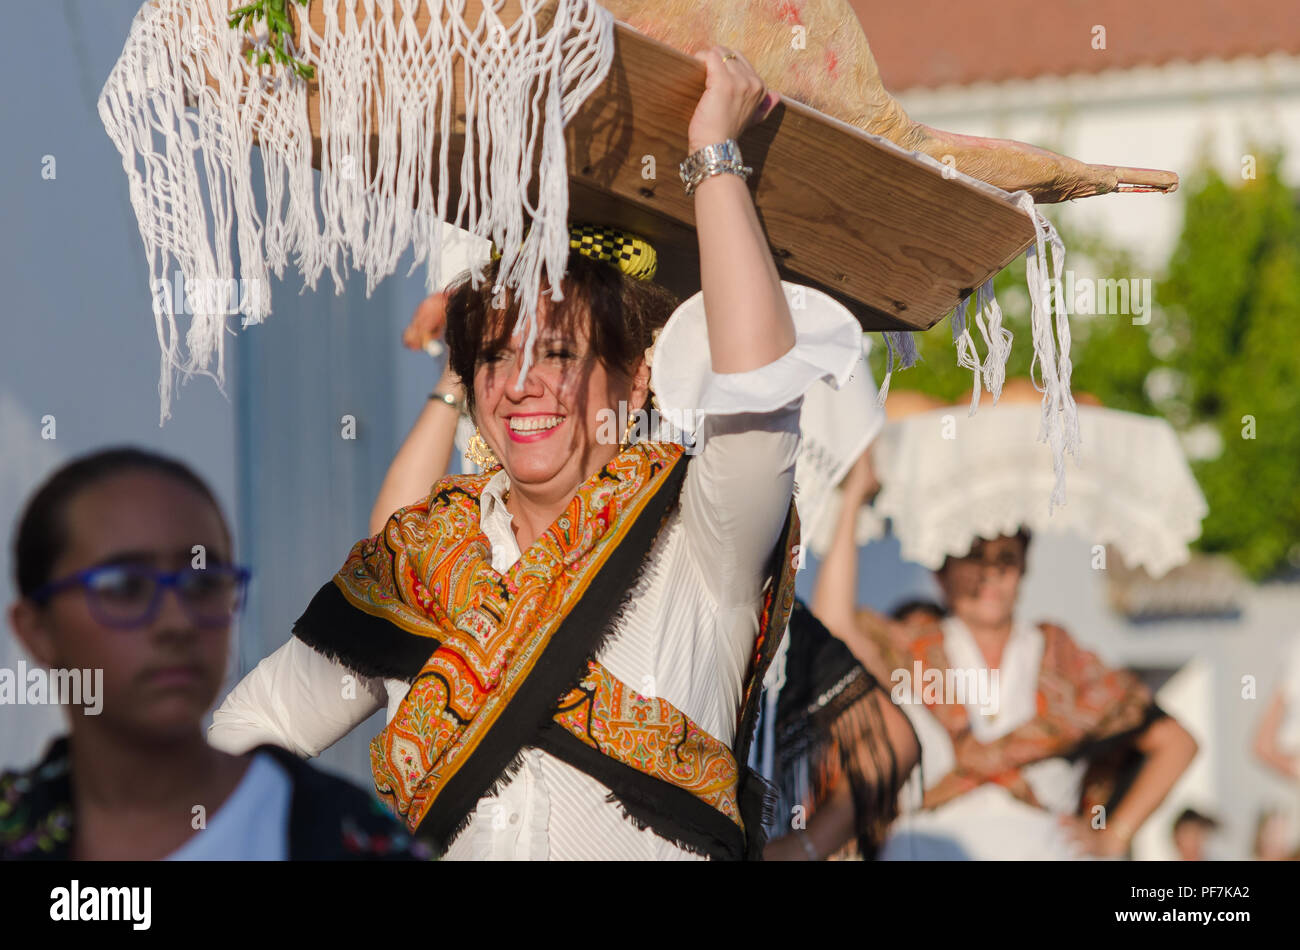 Santiago de Alcantara, SPAIN - 18 AUGUST 2018:Once a year the traditional festival 'La Frenda' is celebrated in the town of Santiago de Alcantara, Cac Stock Photo